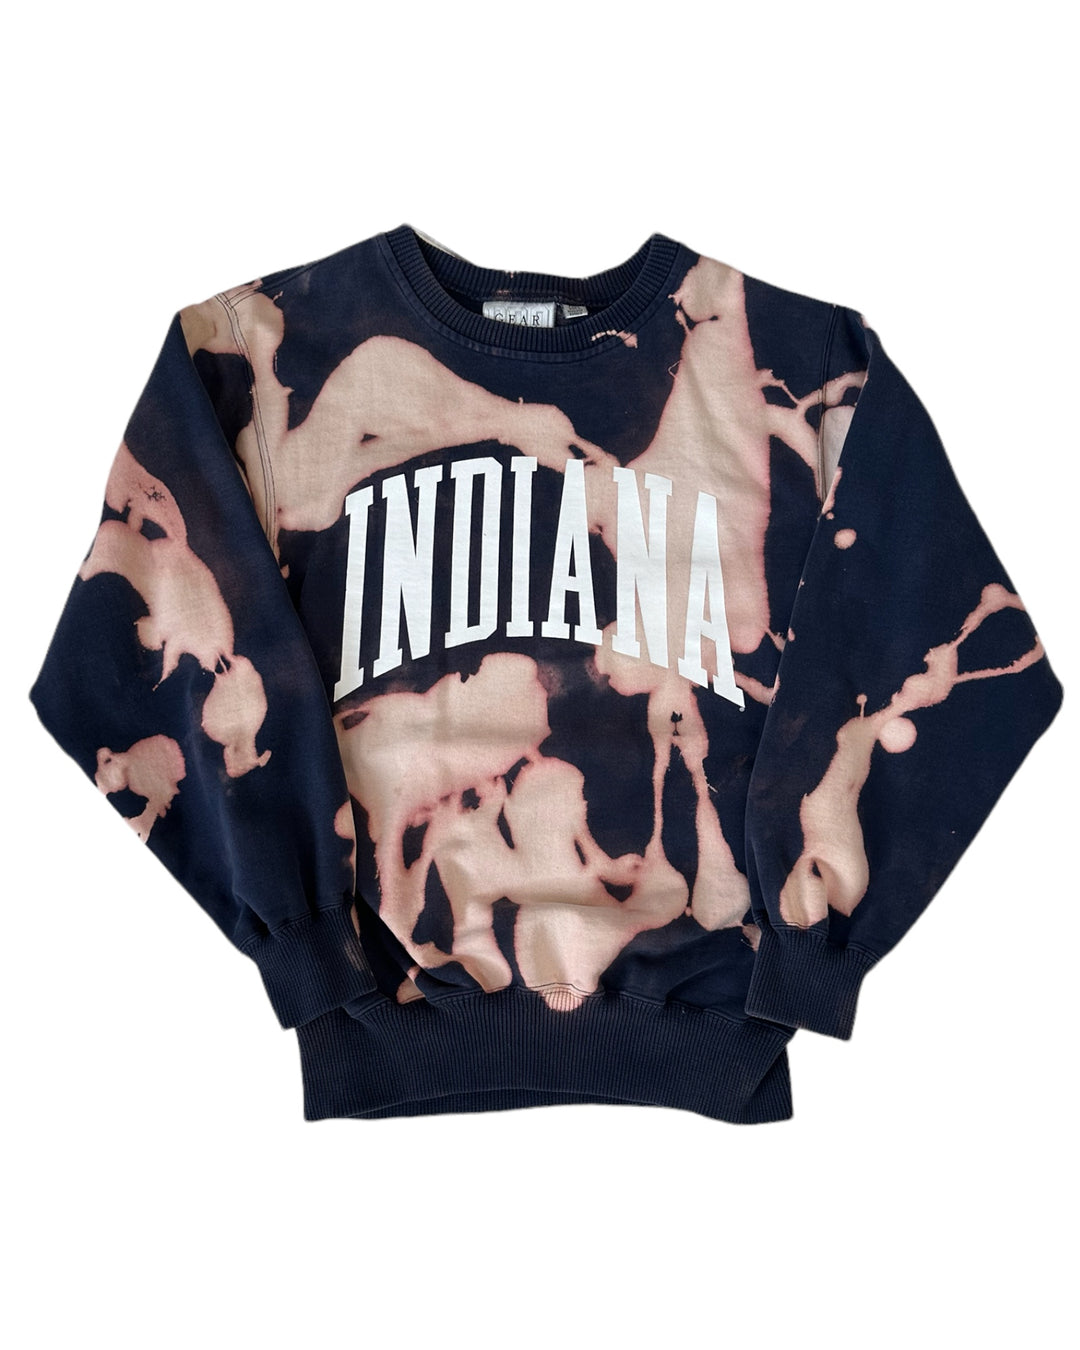 Indiana Vintage Sweatshirt